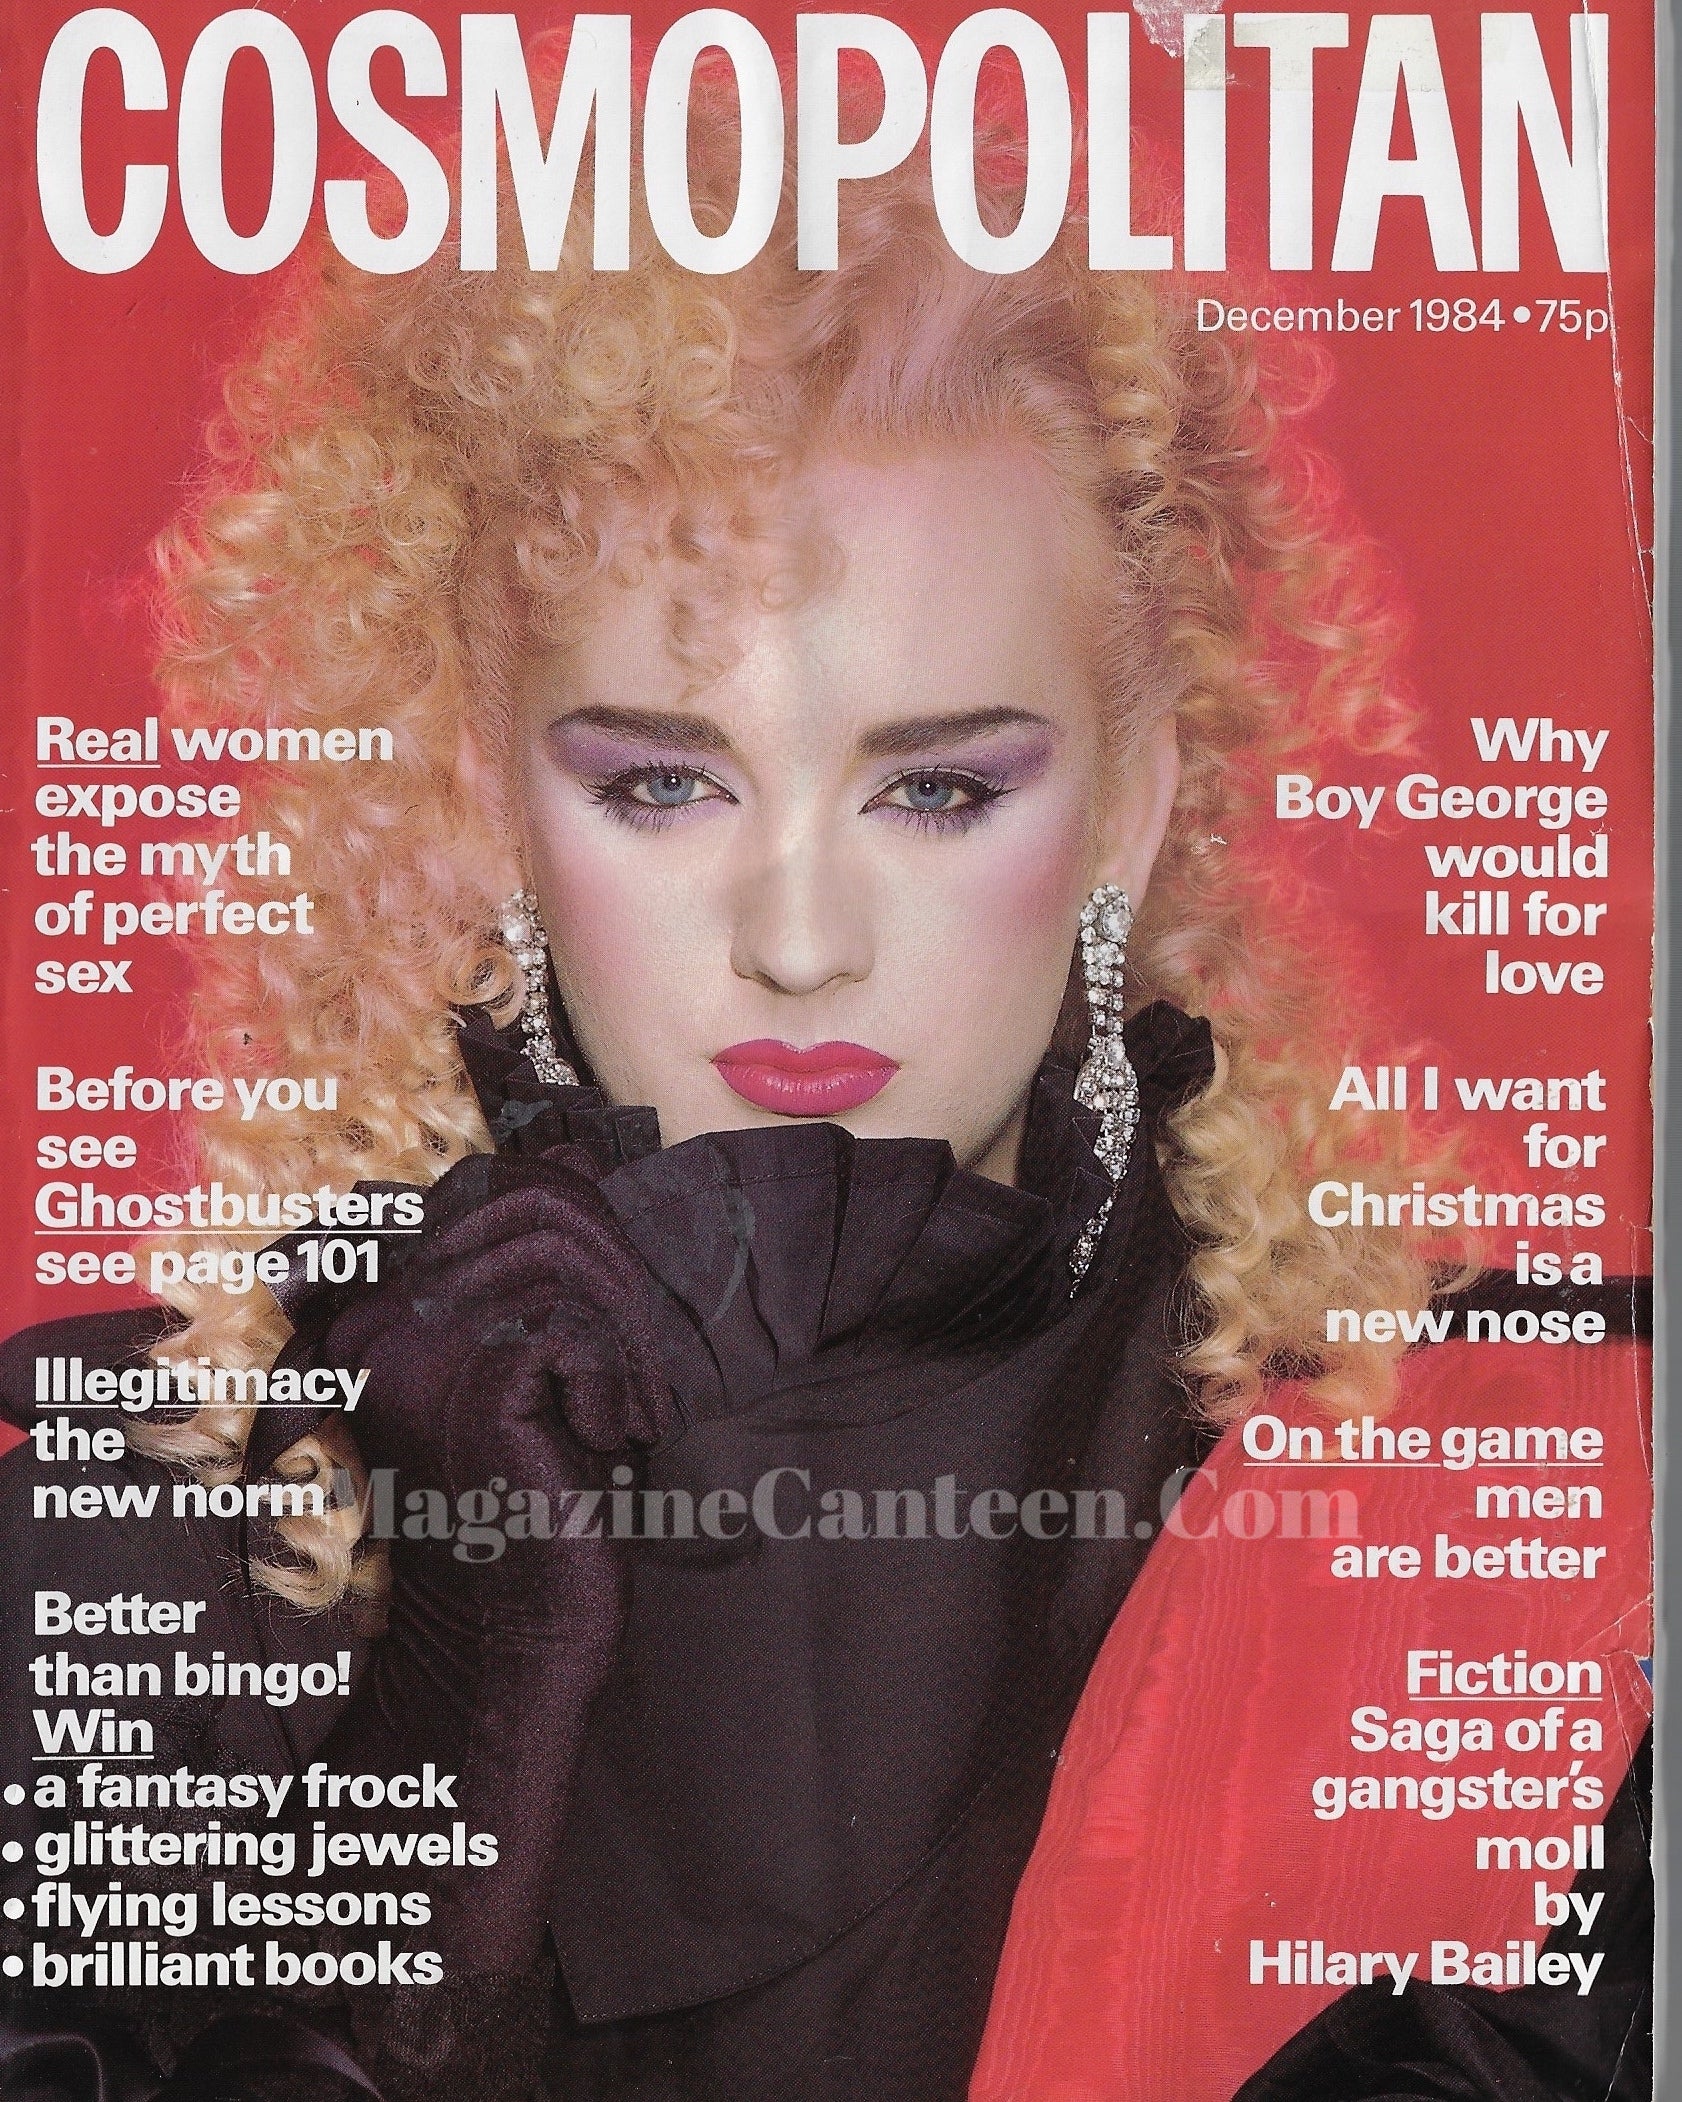 Cosmopolitan Magazine - Boy George